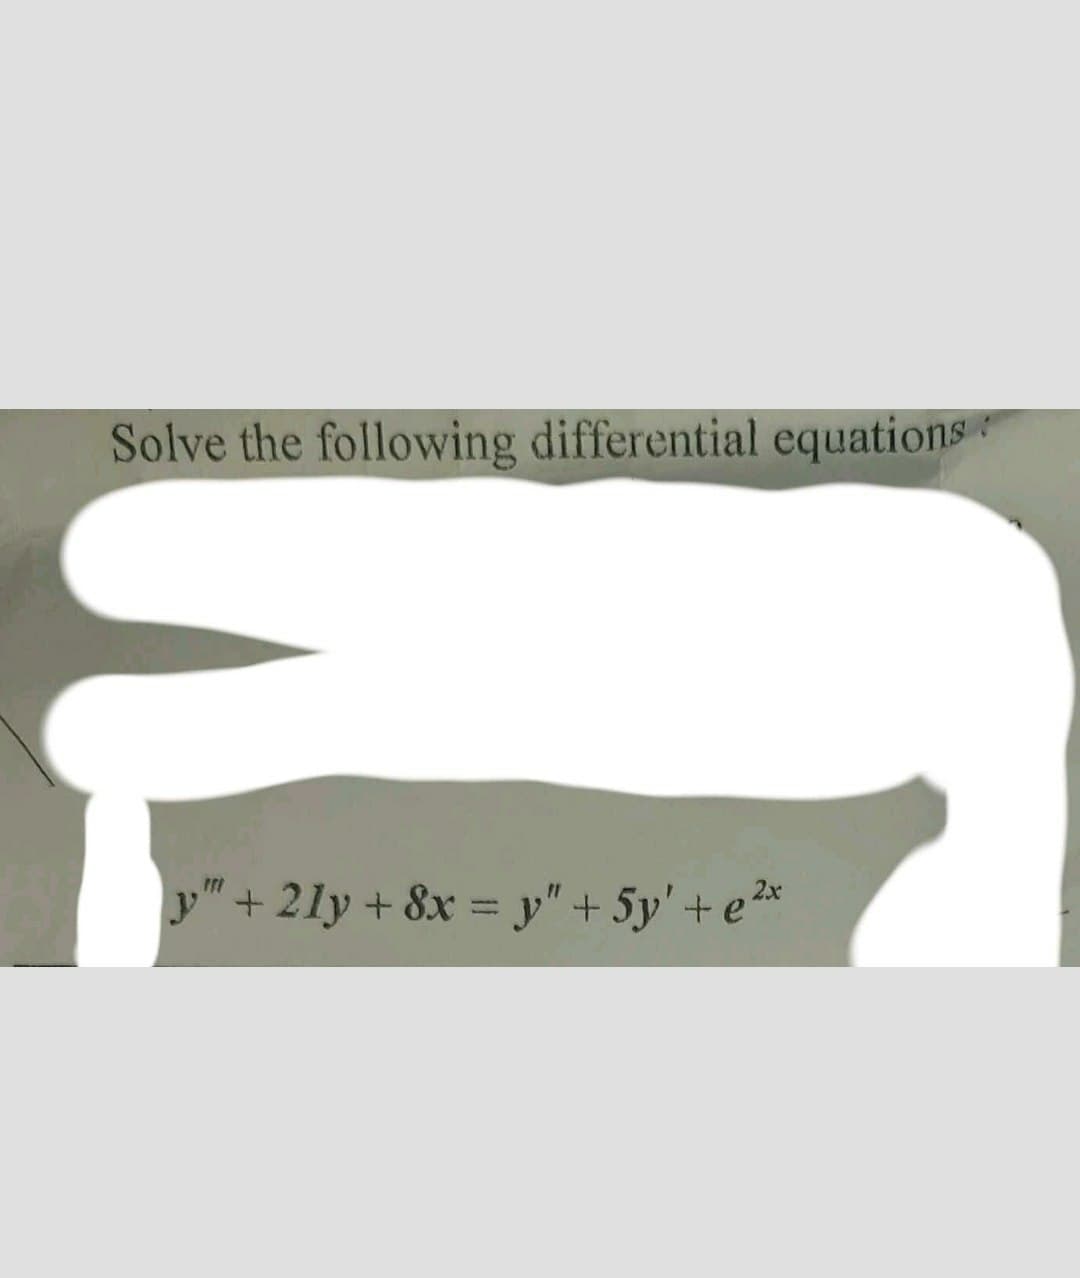 Solve the following differential equations
y"+21y+ 8x = y" + 5y' + e²x